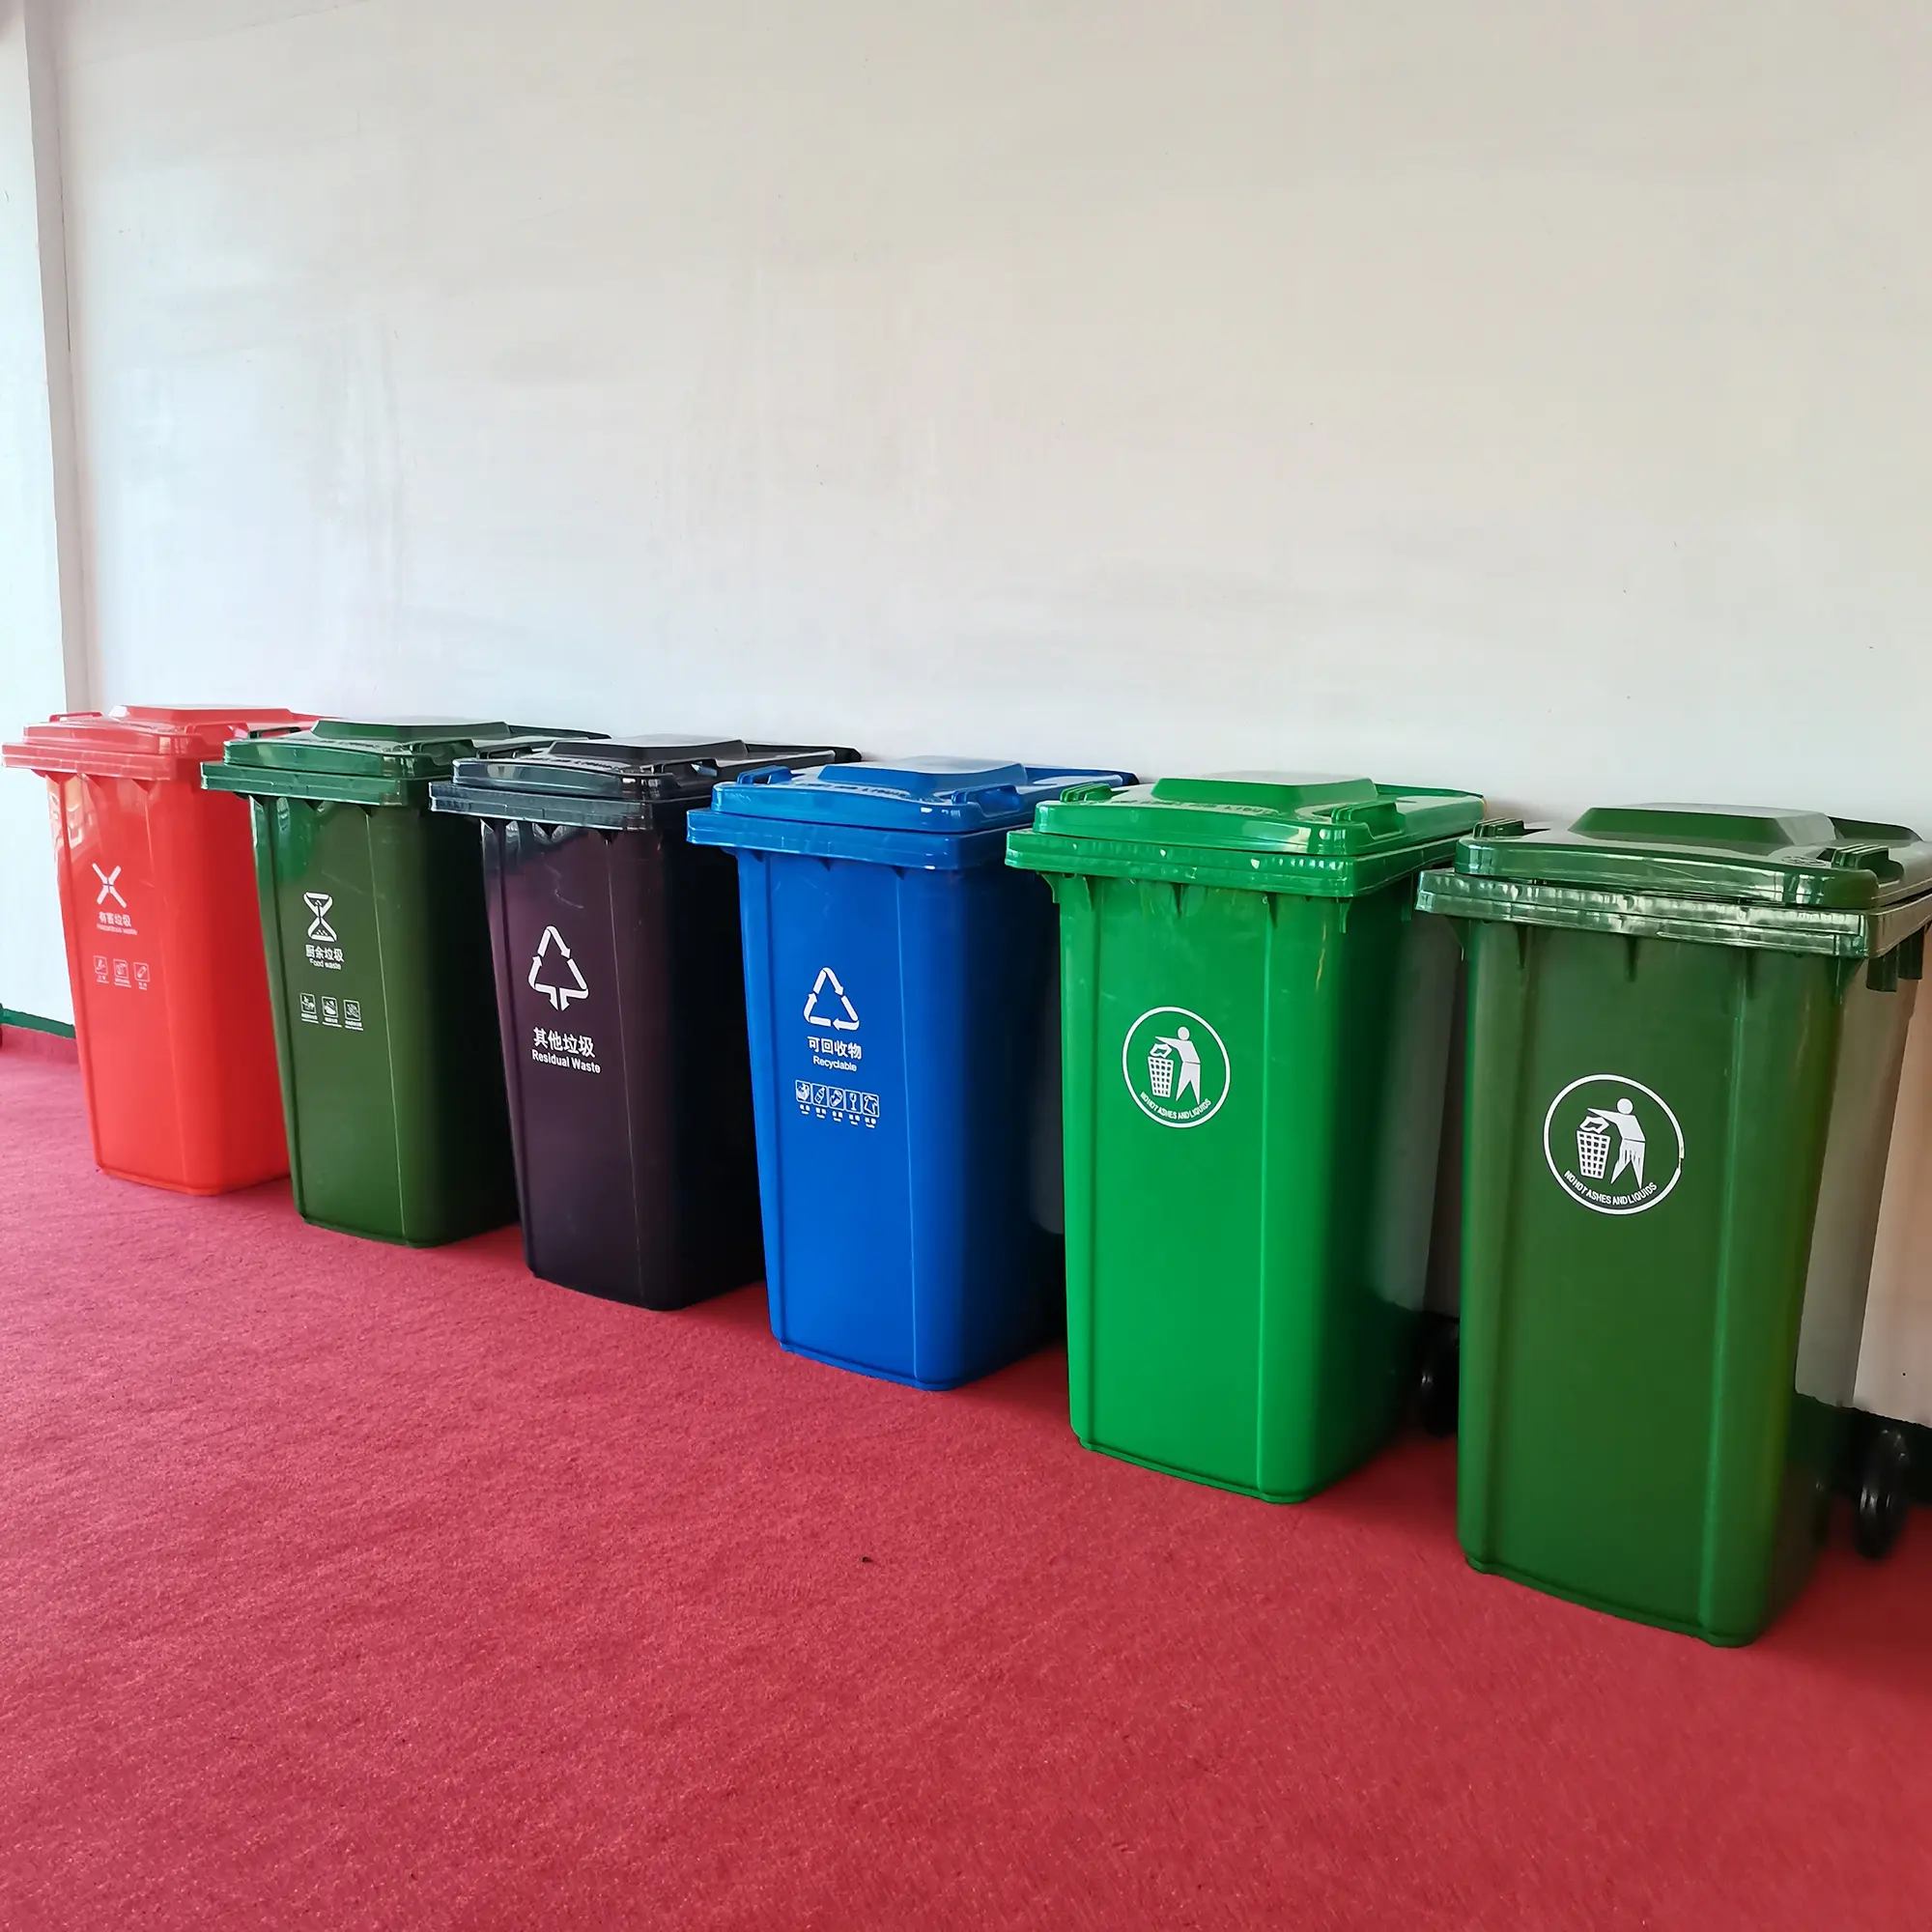 Blue/yellow/green/red 240l trash can 120 240 liter trash bins/basureros plasticos/contenedores de basura /tempat sampah